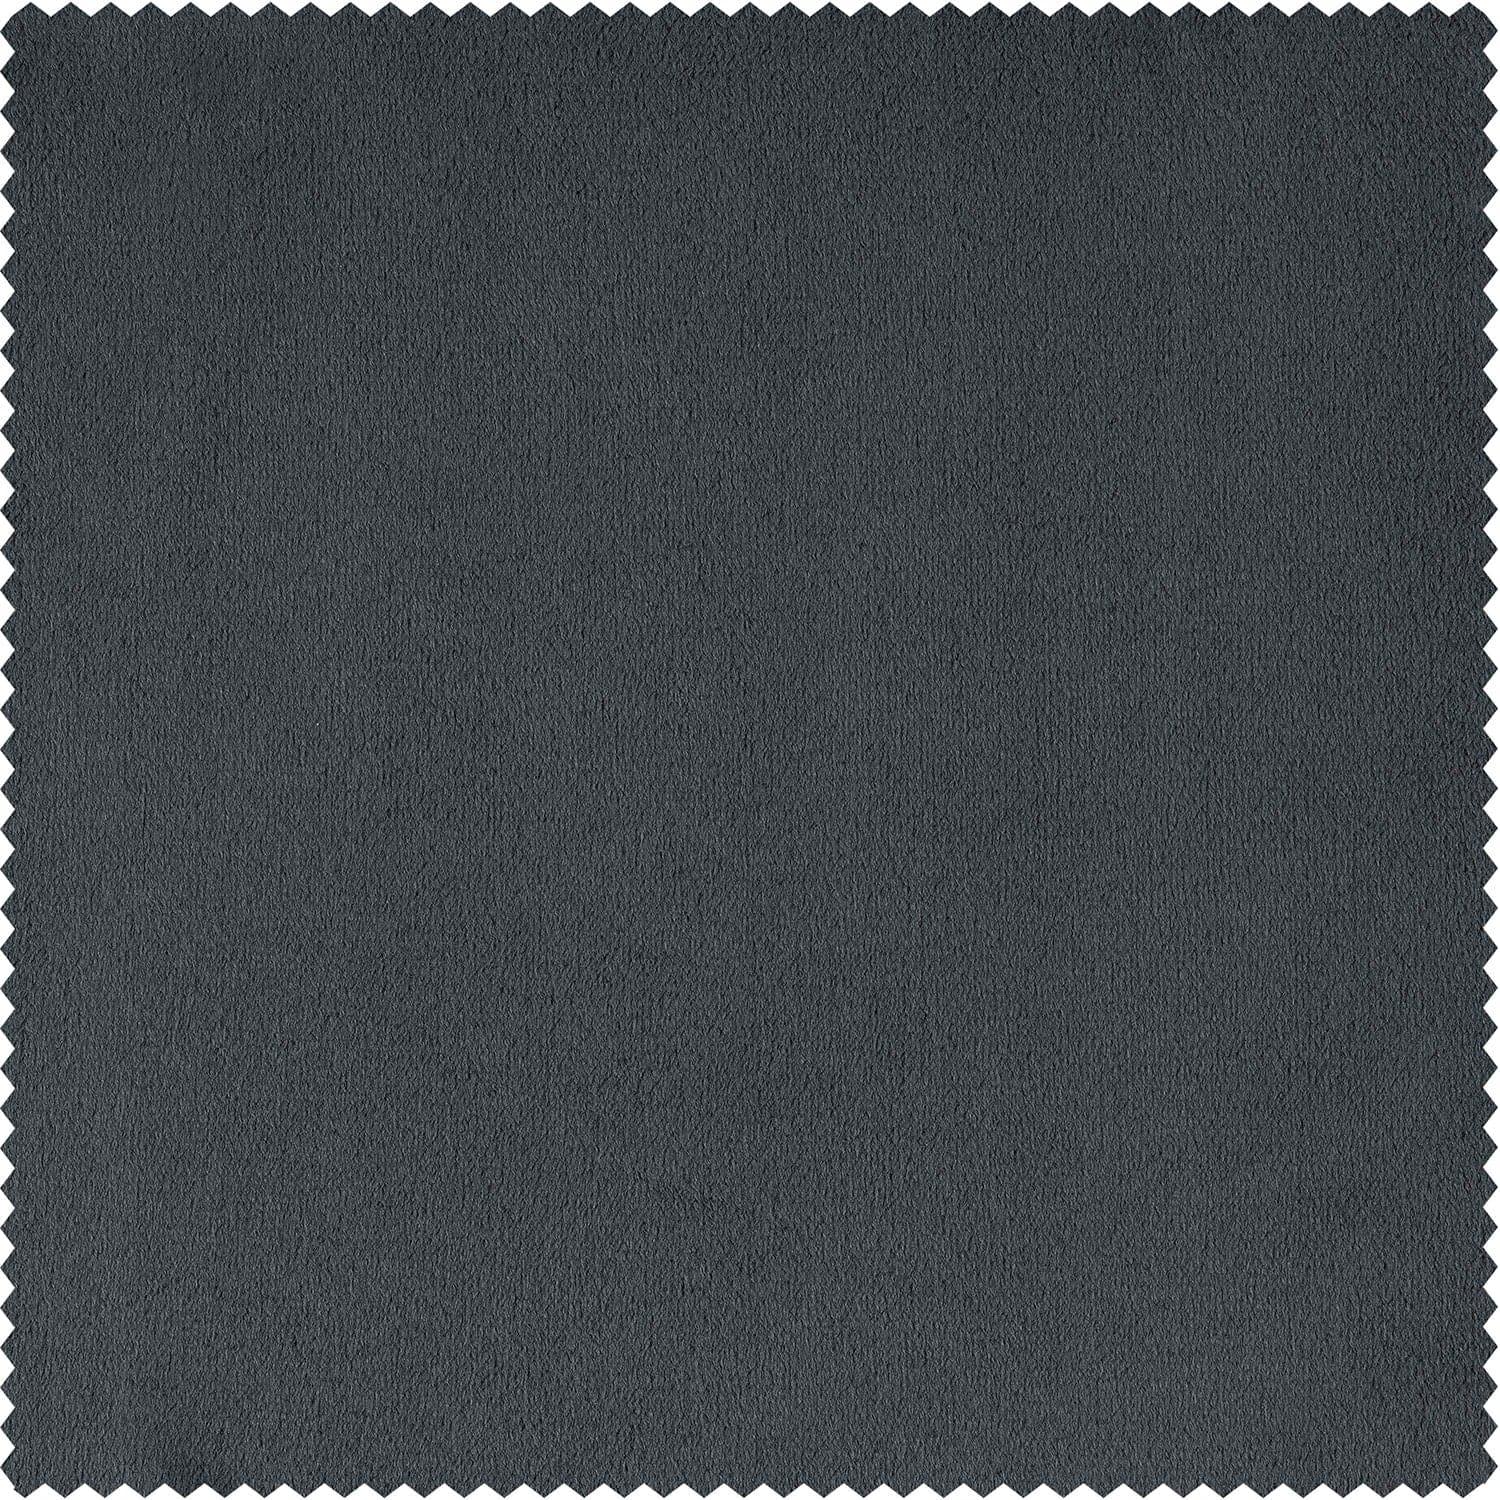 Neutral Grey French Pleat Signature Velvet Blackout Curtain